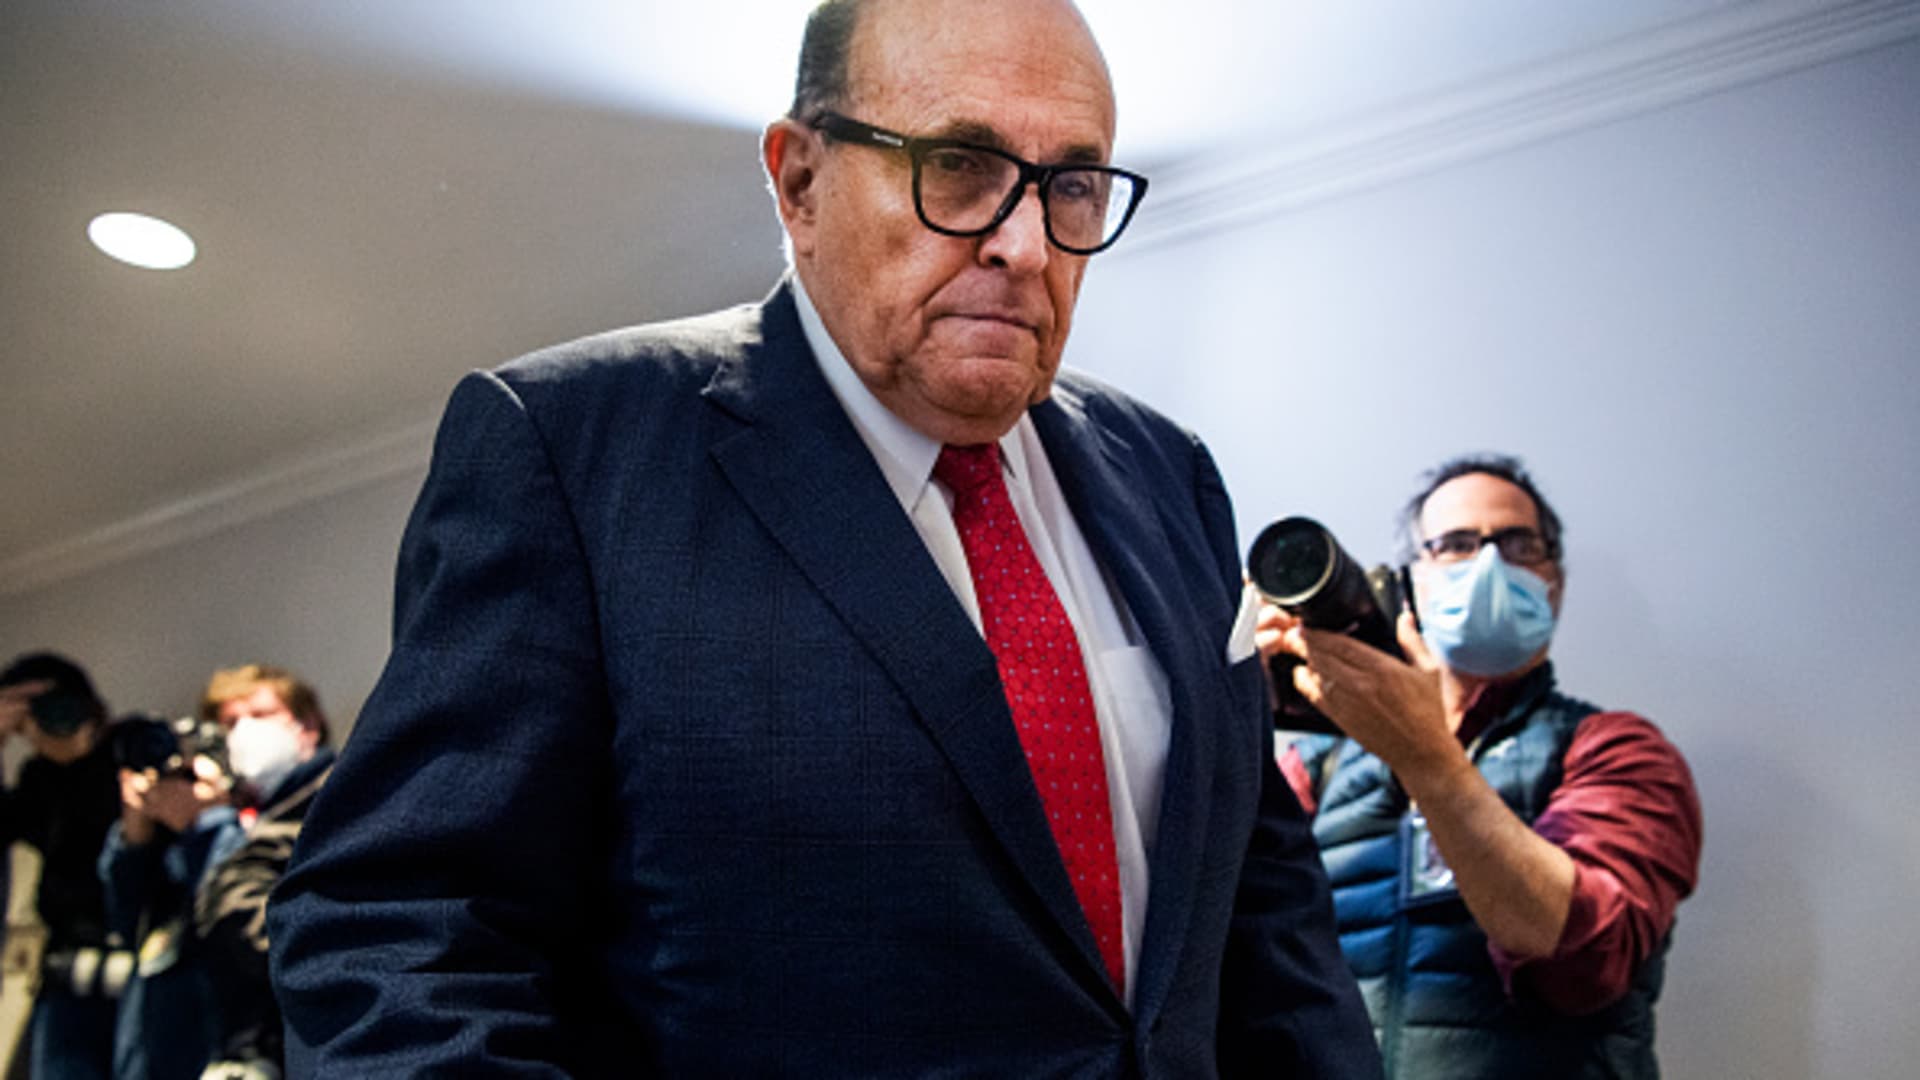 Rudy Giuliani named a target in Trump Georgia election probe, lawyers say